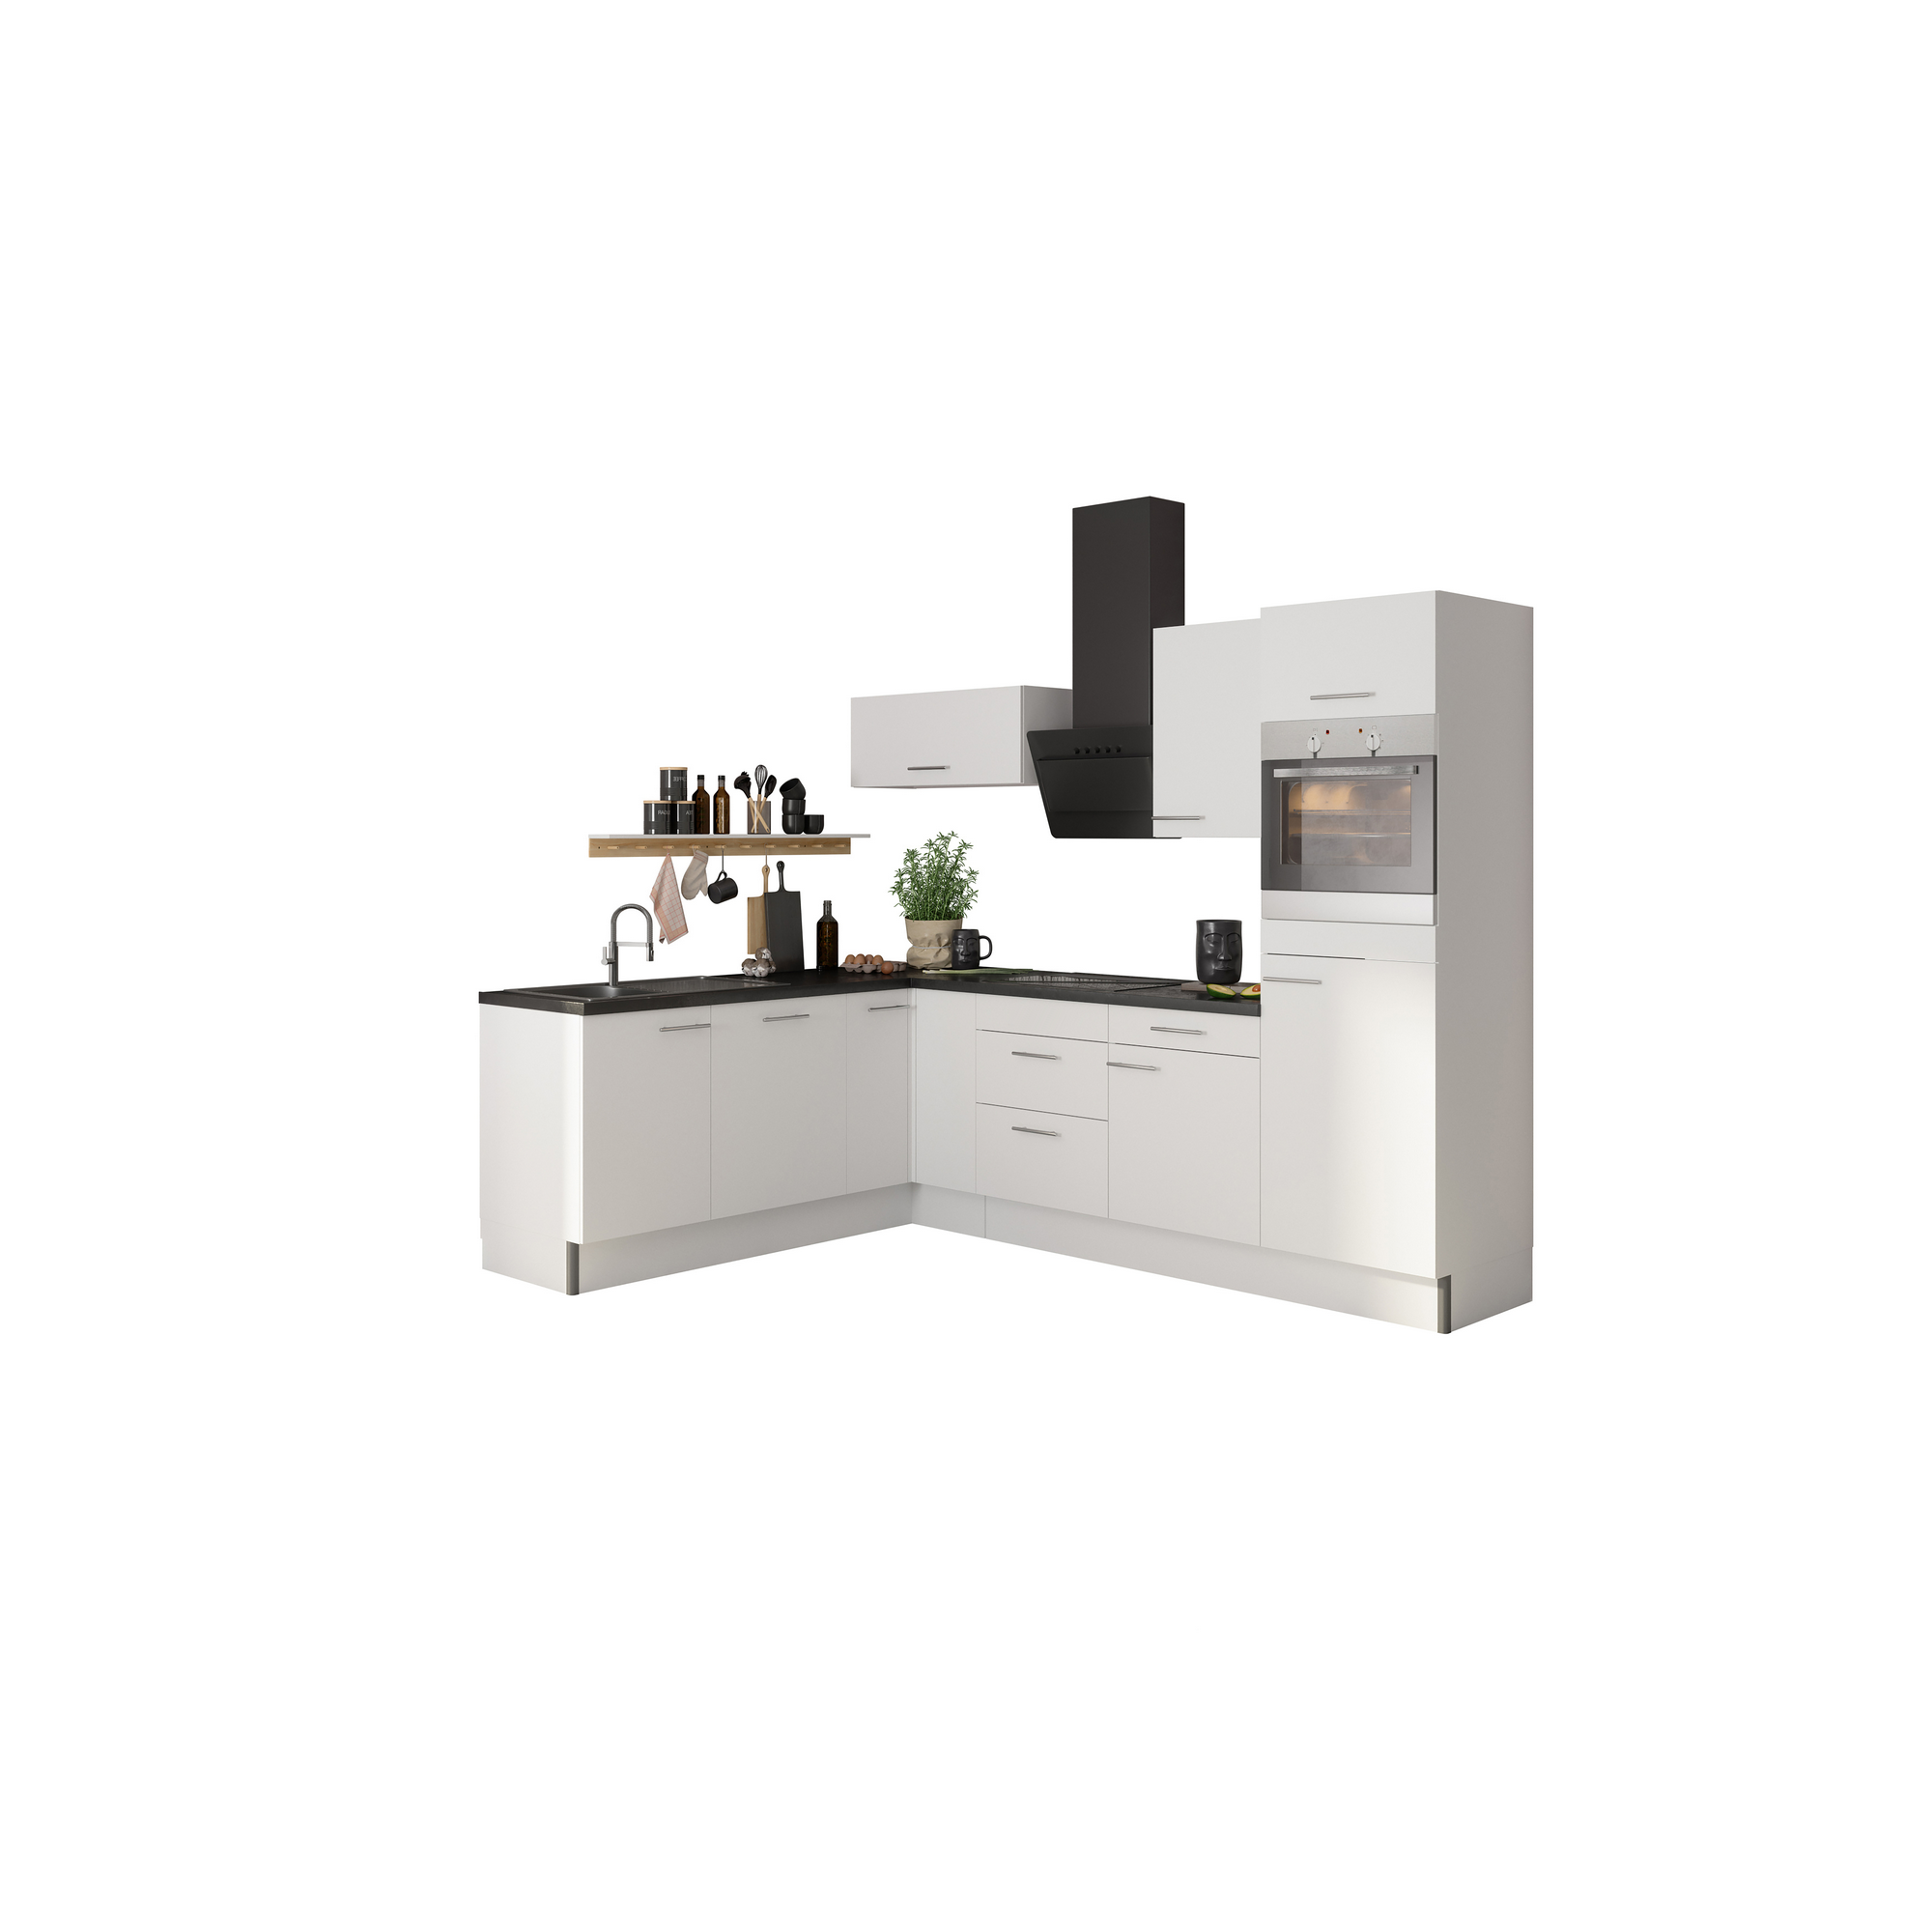 Winkelküche mit E-Geräten 'OPTIkoncept Bengt932' weiß 270 cm + product picture